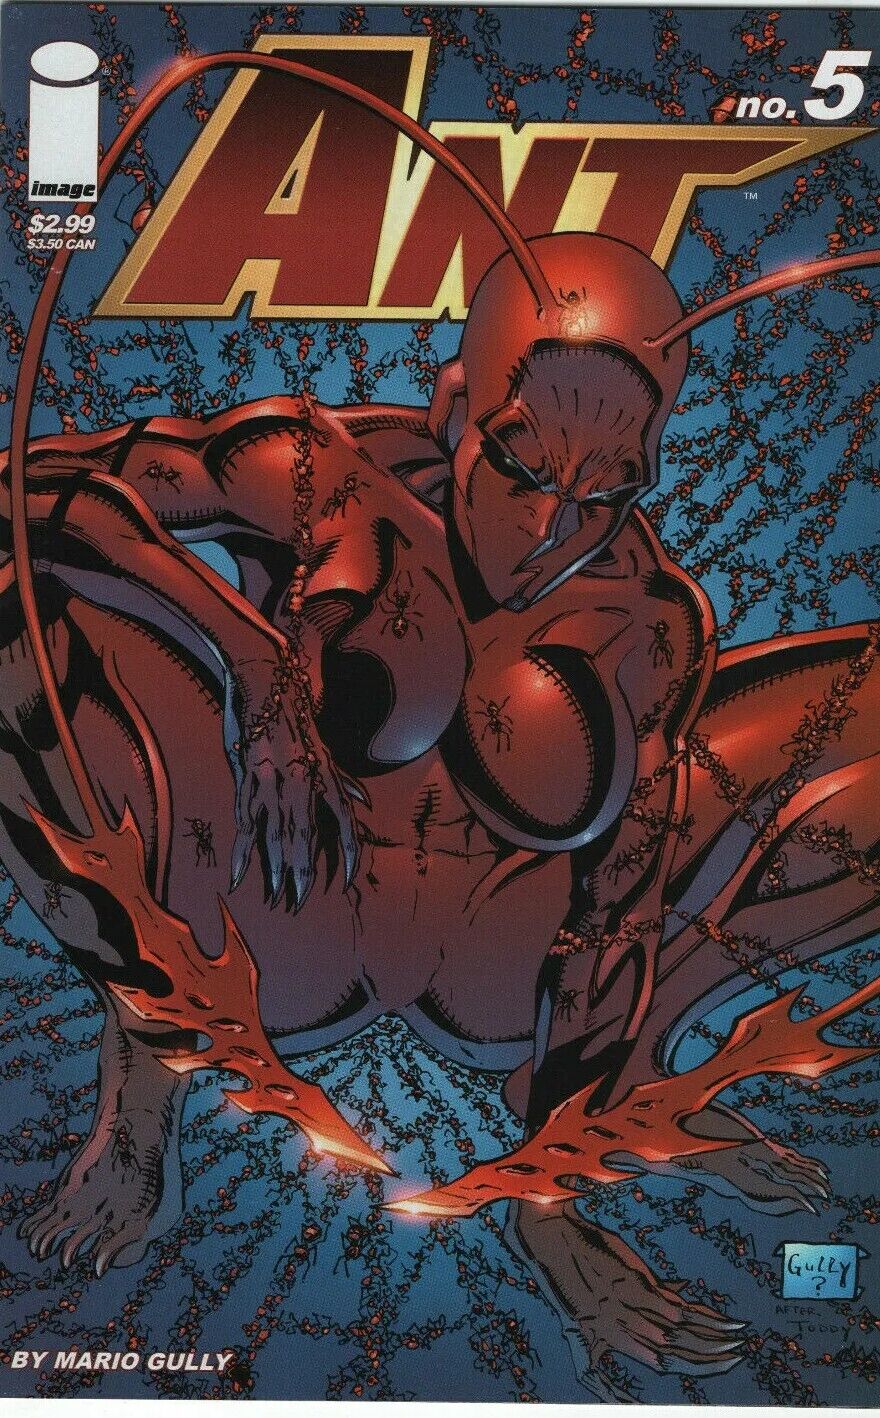 Ant #5 Image Comics Mario Gully Todd McFarlane Spider-Man Homage Cover 1 300